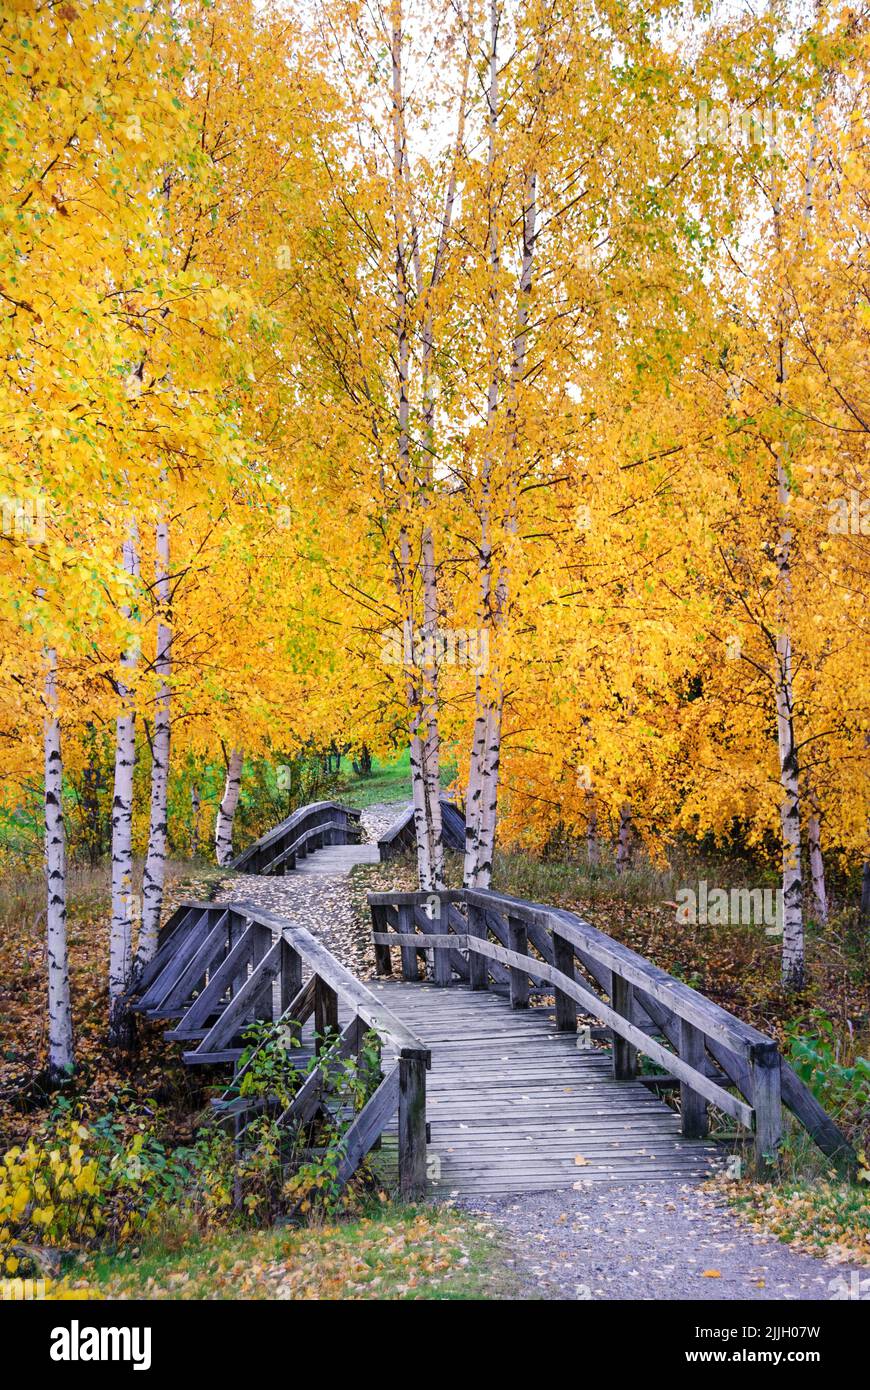 Wooden bridge in autumn landscape Stock Photo